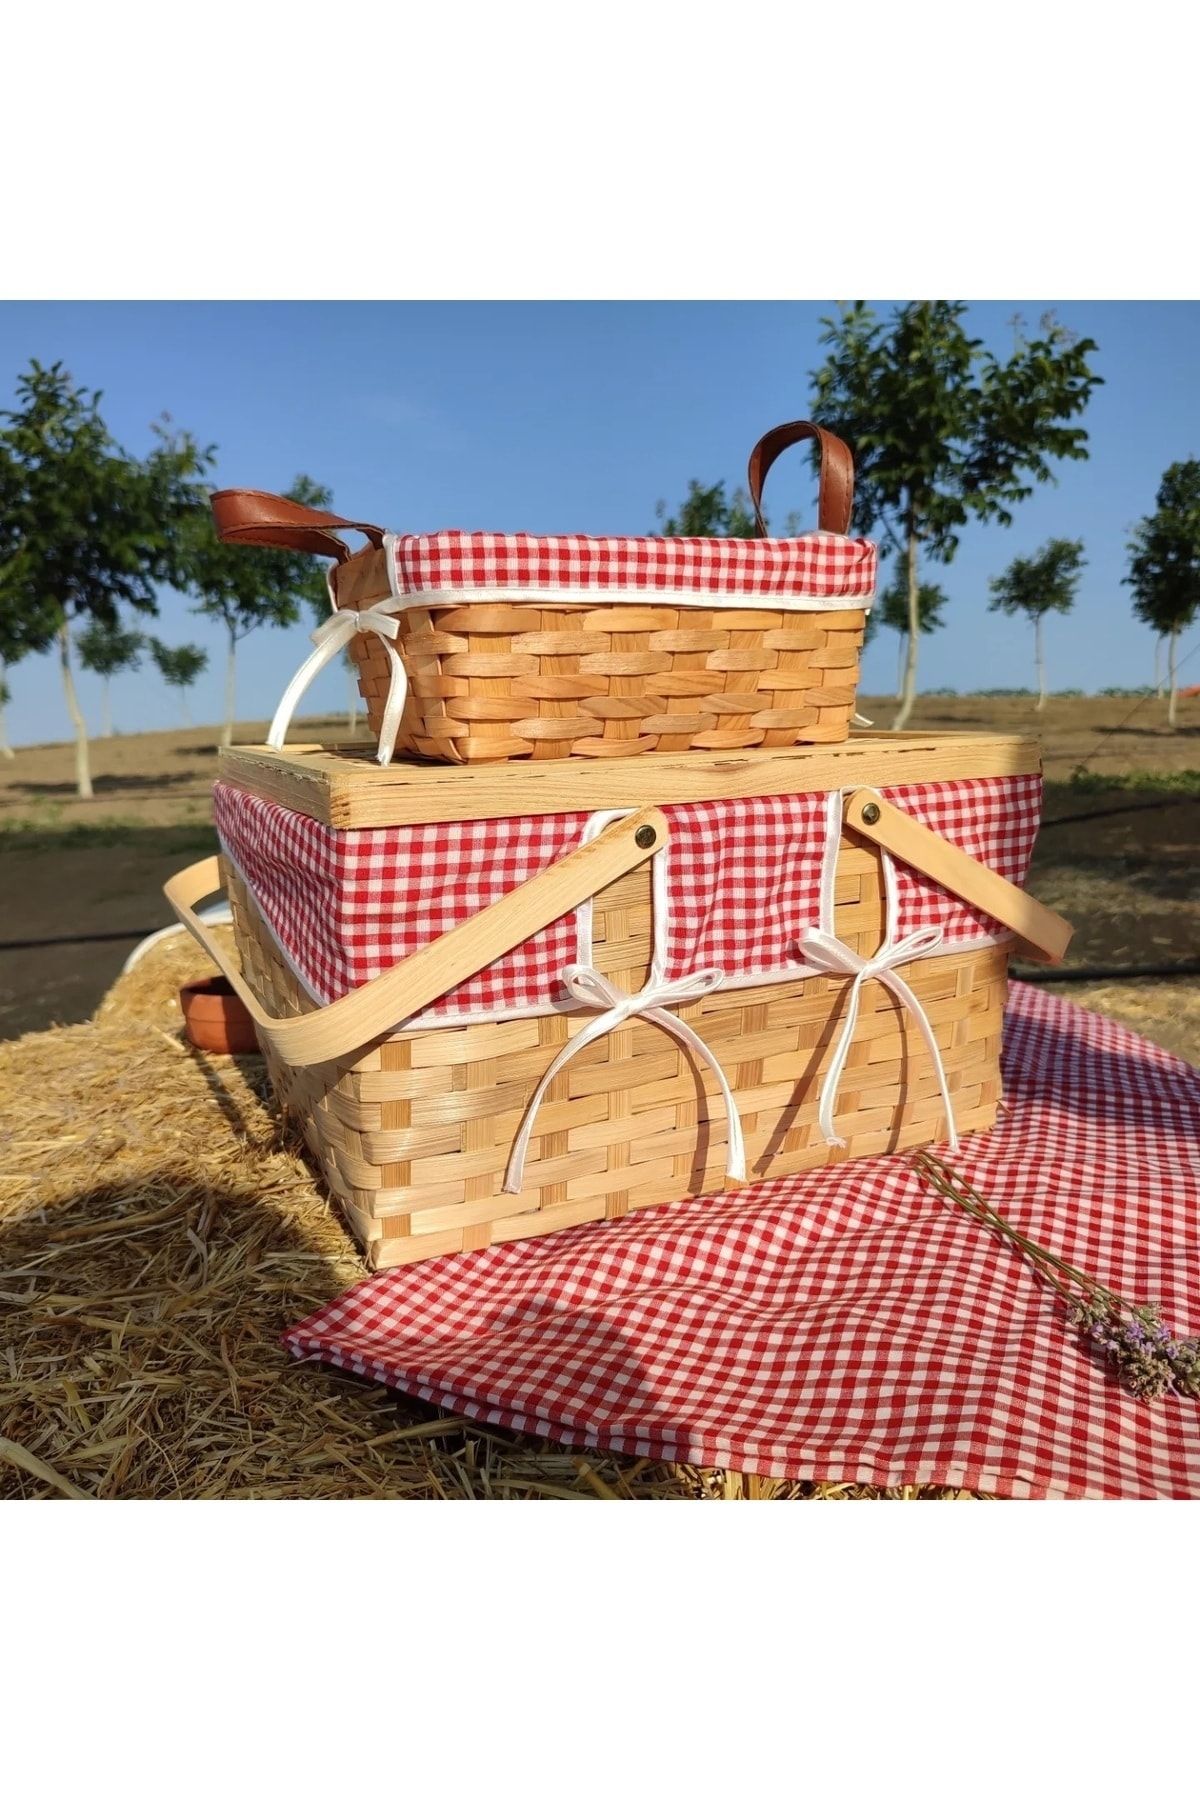 HARMONİ FASHİON Kapaklı Hasır Piknik Sepeti Seti Kapaklı Piknik Sepeti Ekmek Sepeti Masa Örtüsü Set 30 X 22 X 18cm